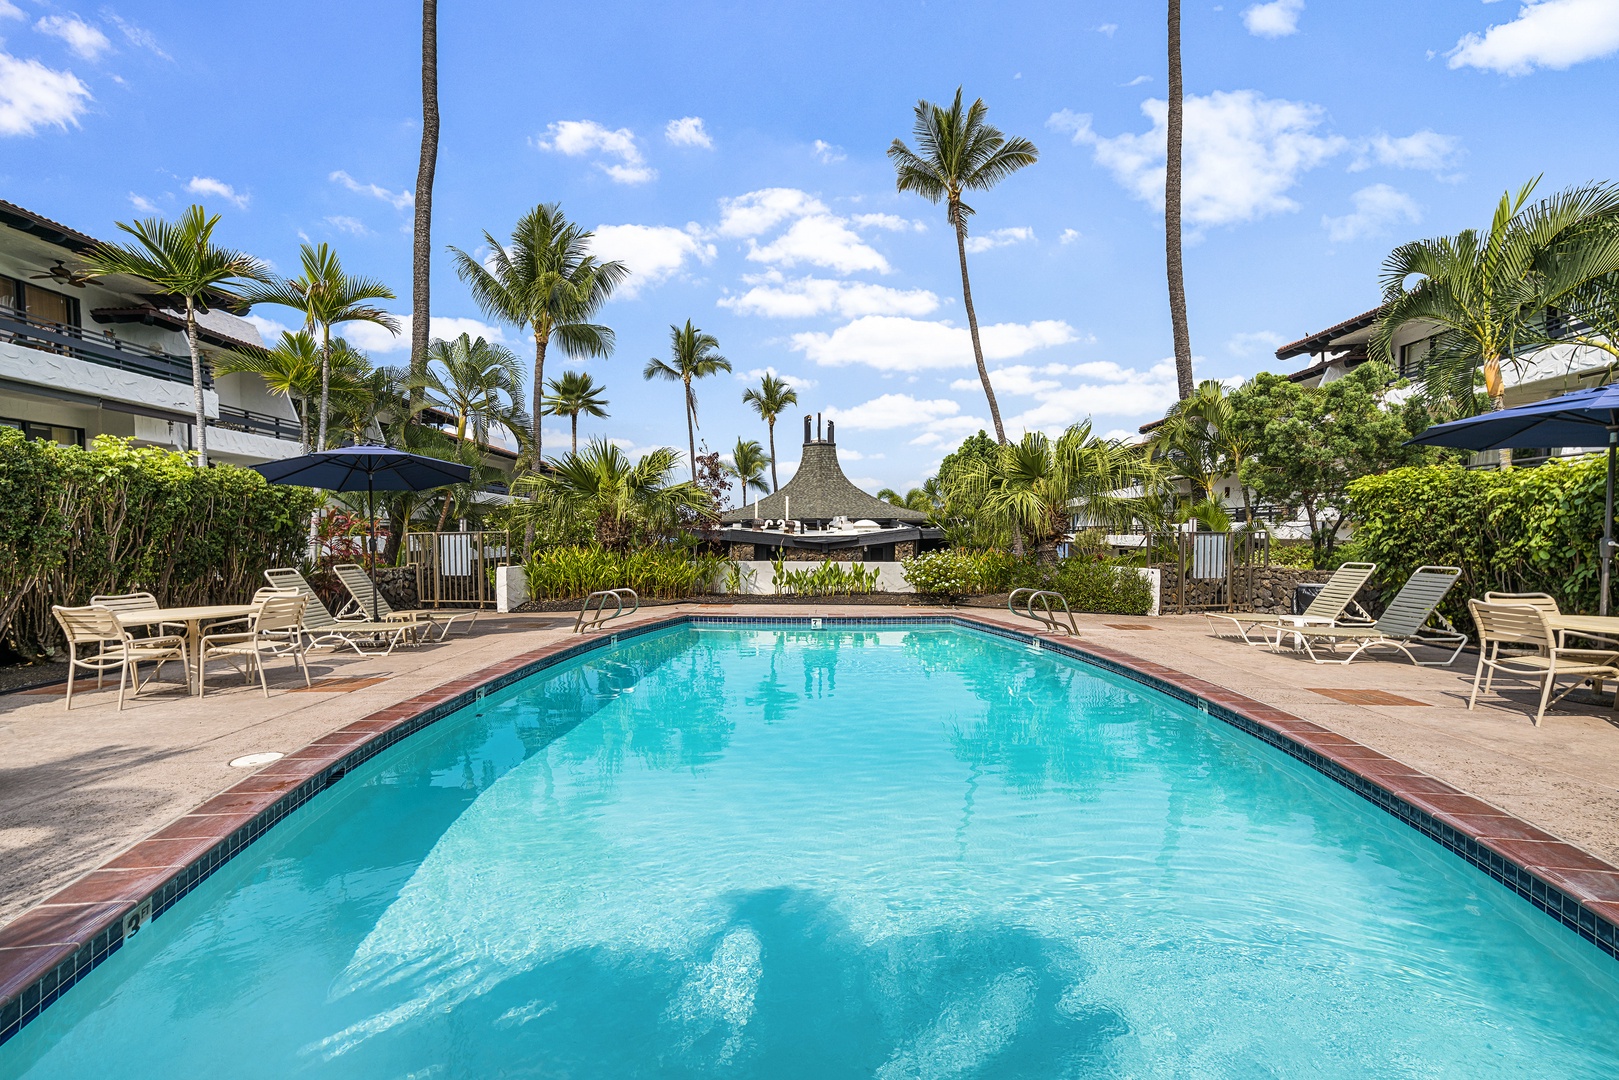 Kailua Kona Vacation Rentals, Casa De Emdeko 235 - Fresh water pool at the Casa De Emdeko complex